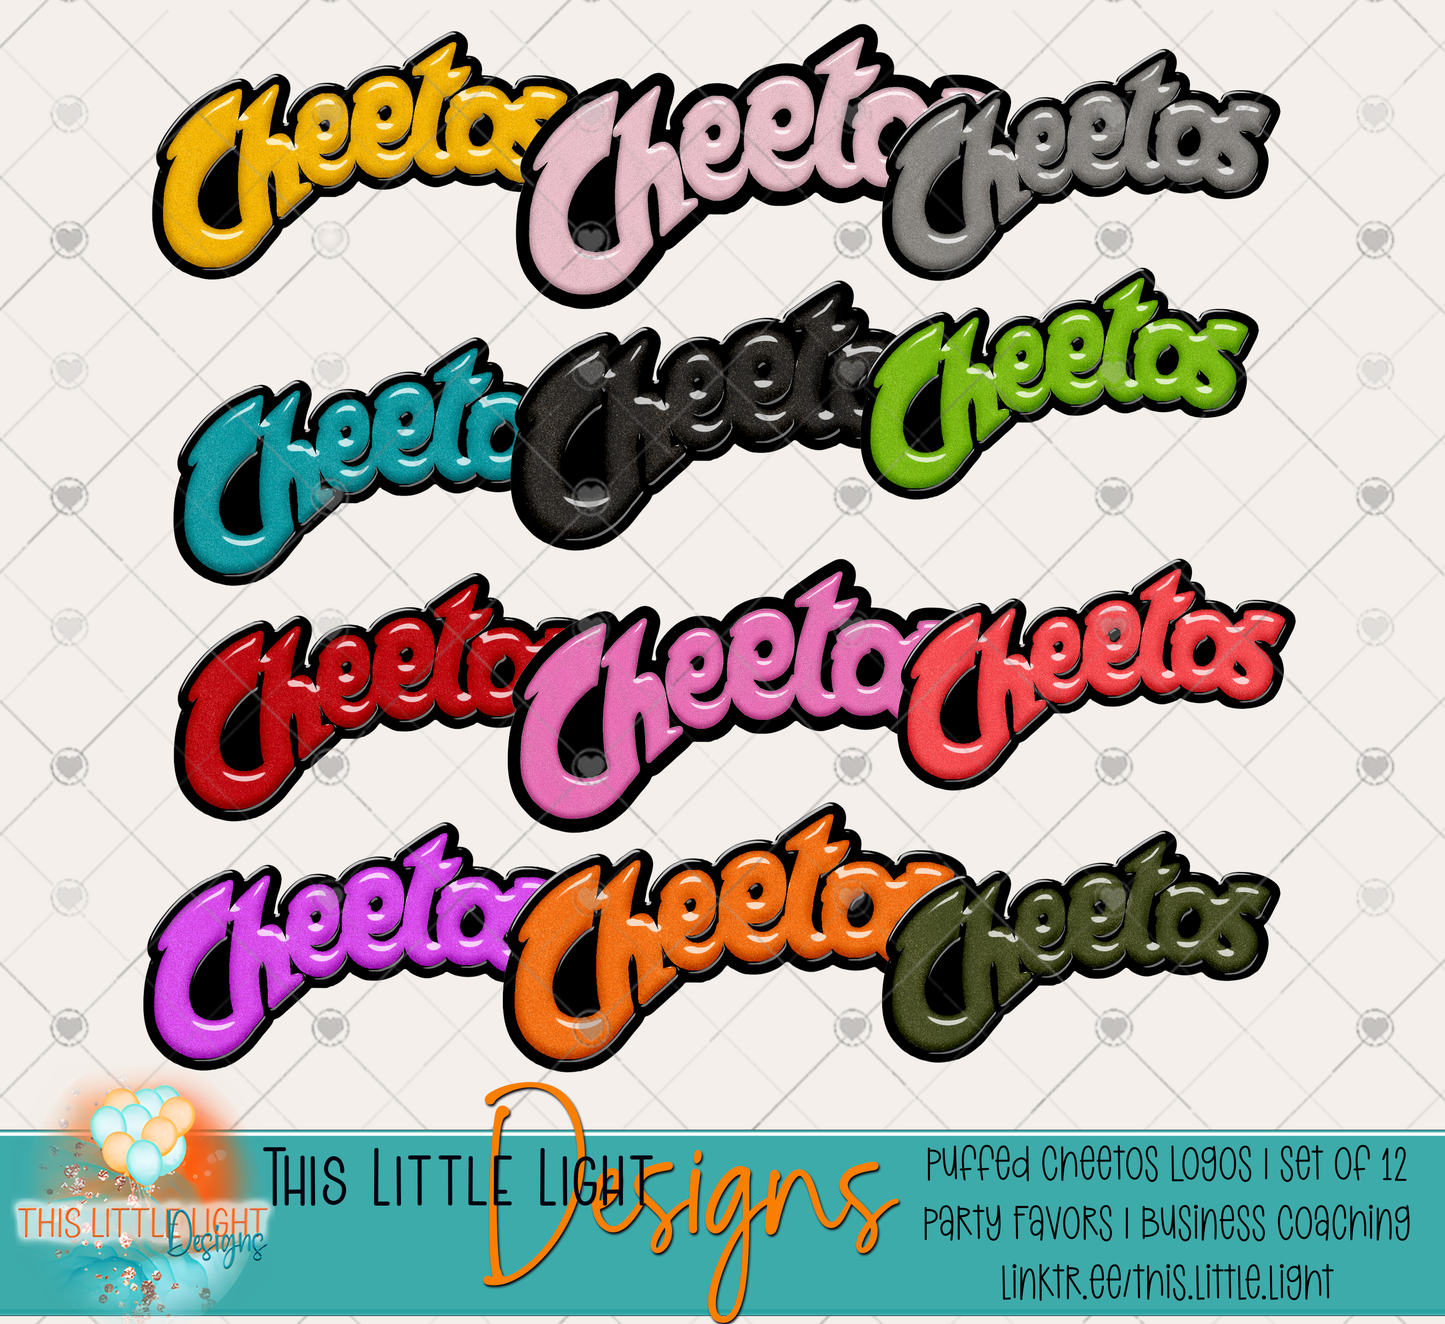 Custom Puffed Cheetos Logos | 300 DPI | Set of 12 Files